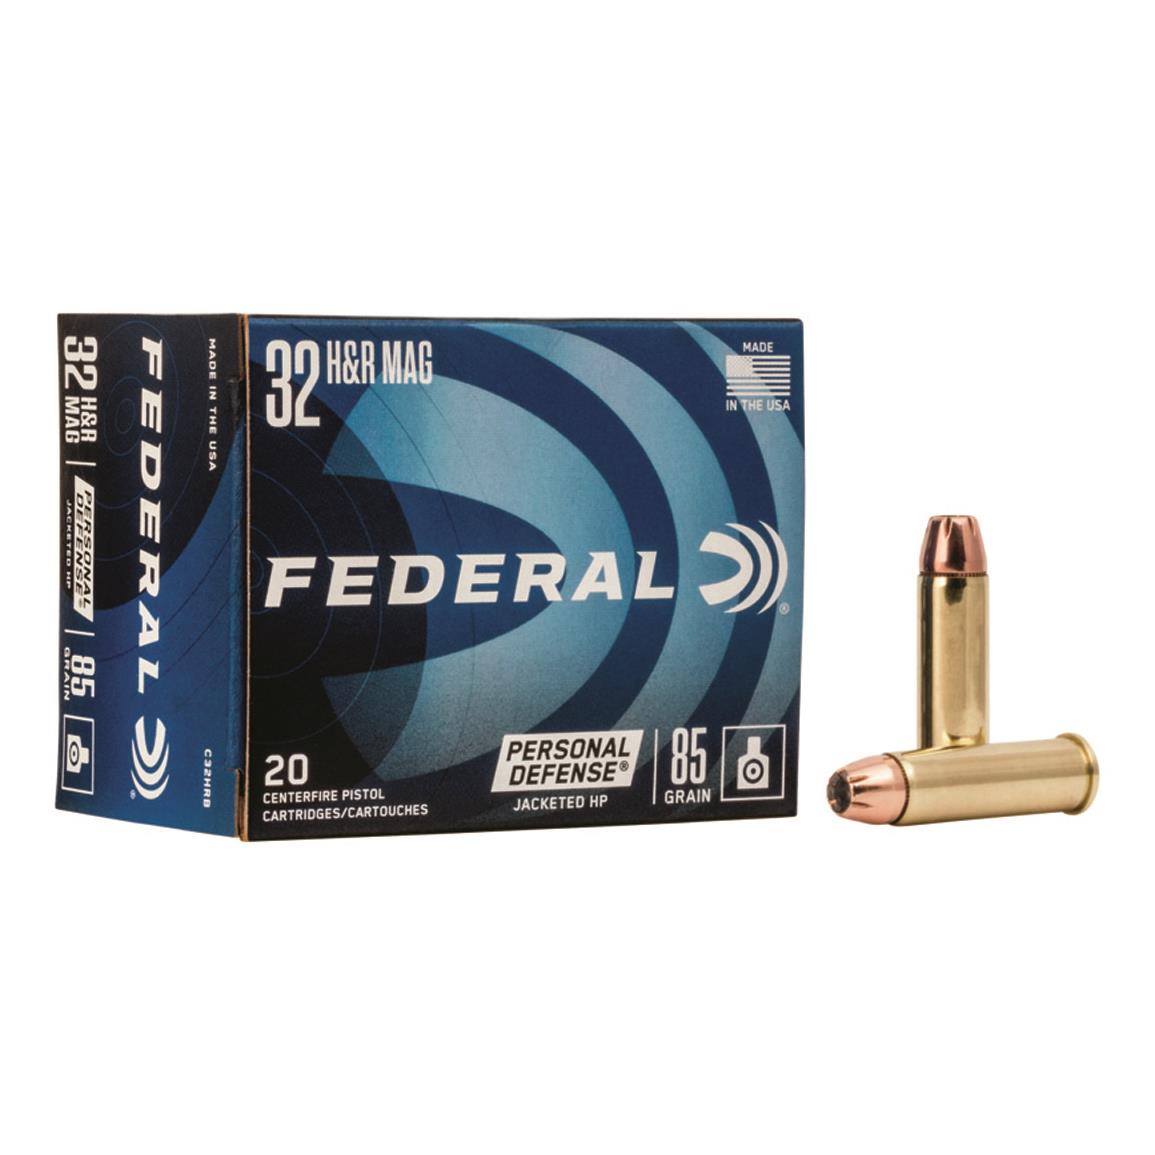 Federal Personal Defense, .32 H&R Magnum, JHP, 85 Grain, 20 Rounds